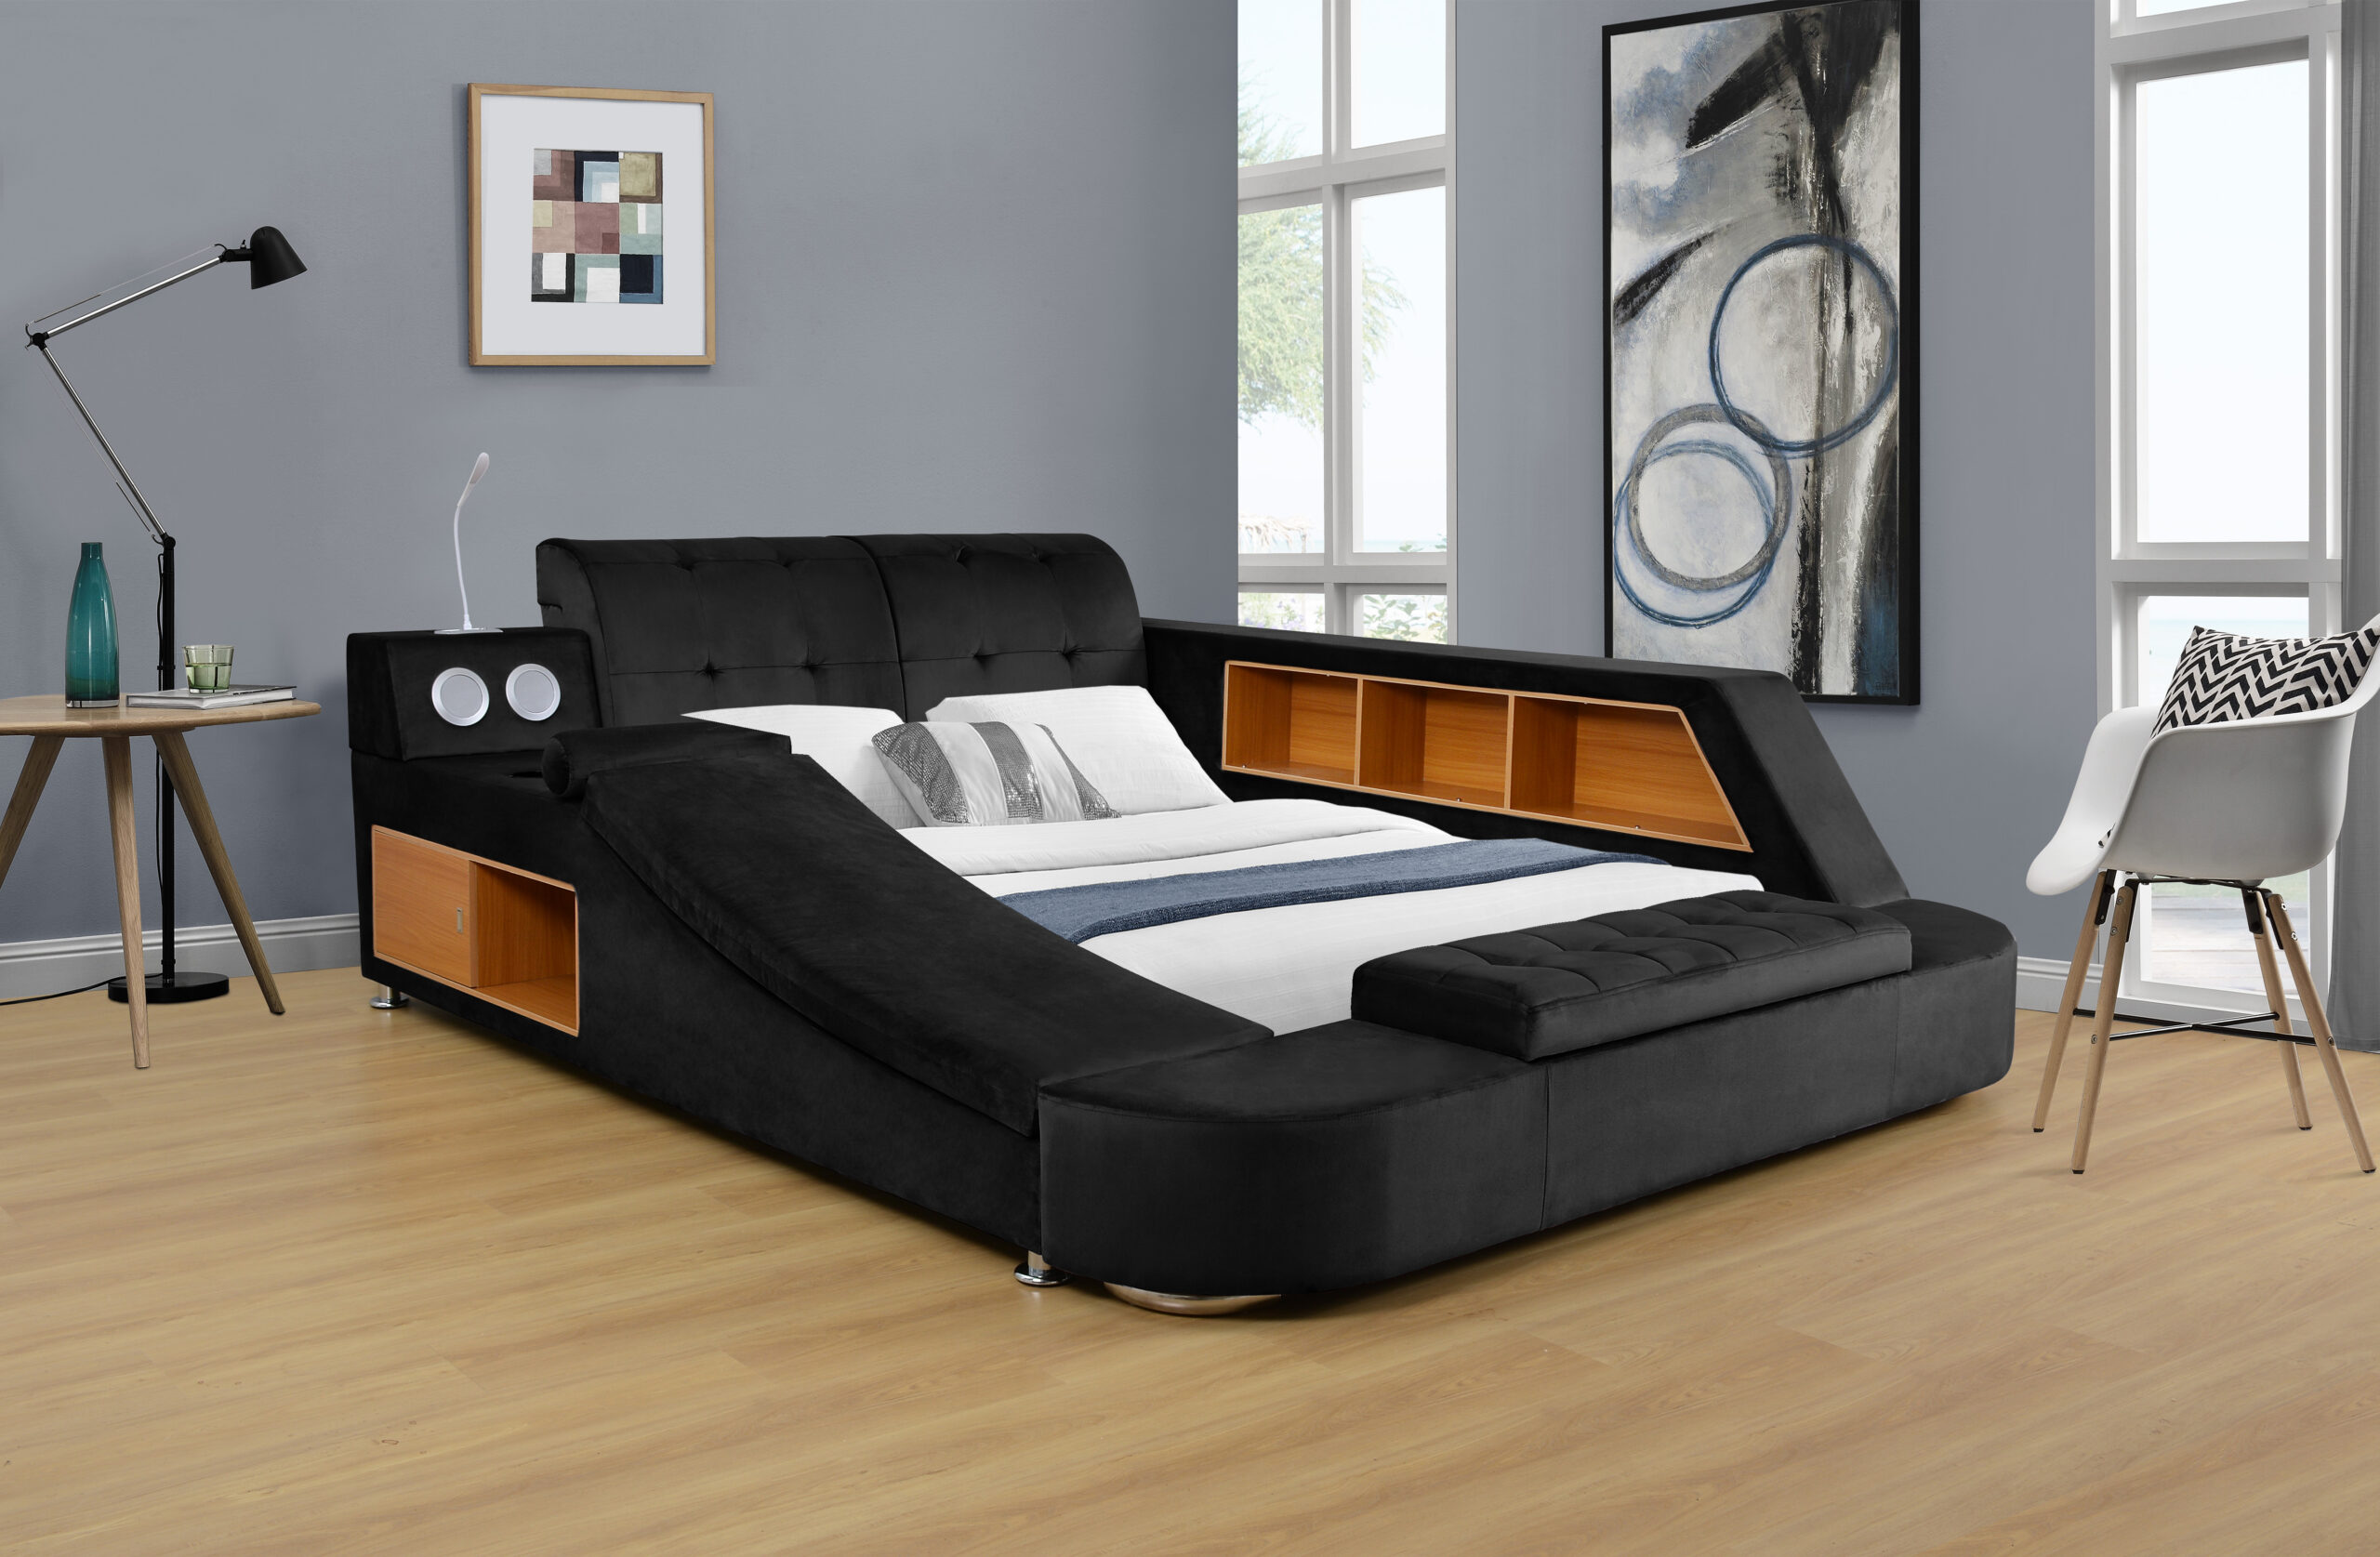 SUPER MULTI FUNCTION Bed with Massage, Music Speakers, Light, Storage, Safe, etc